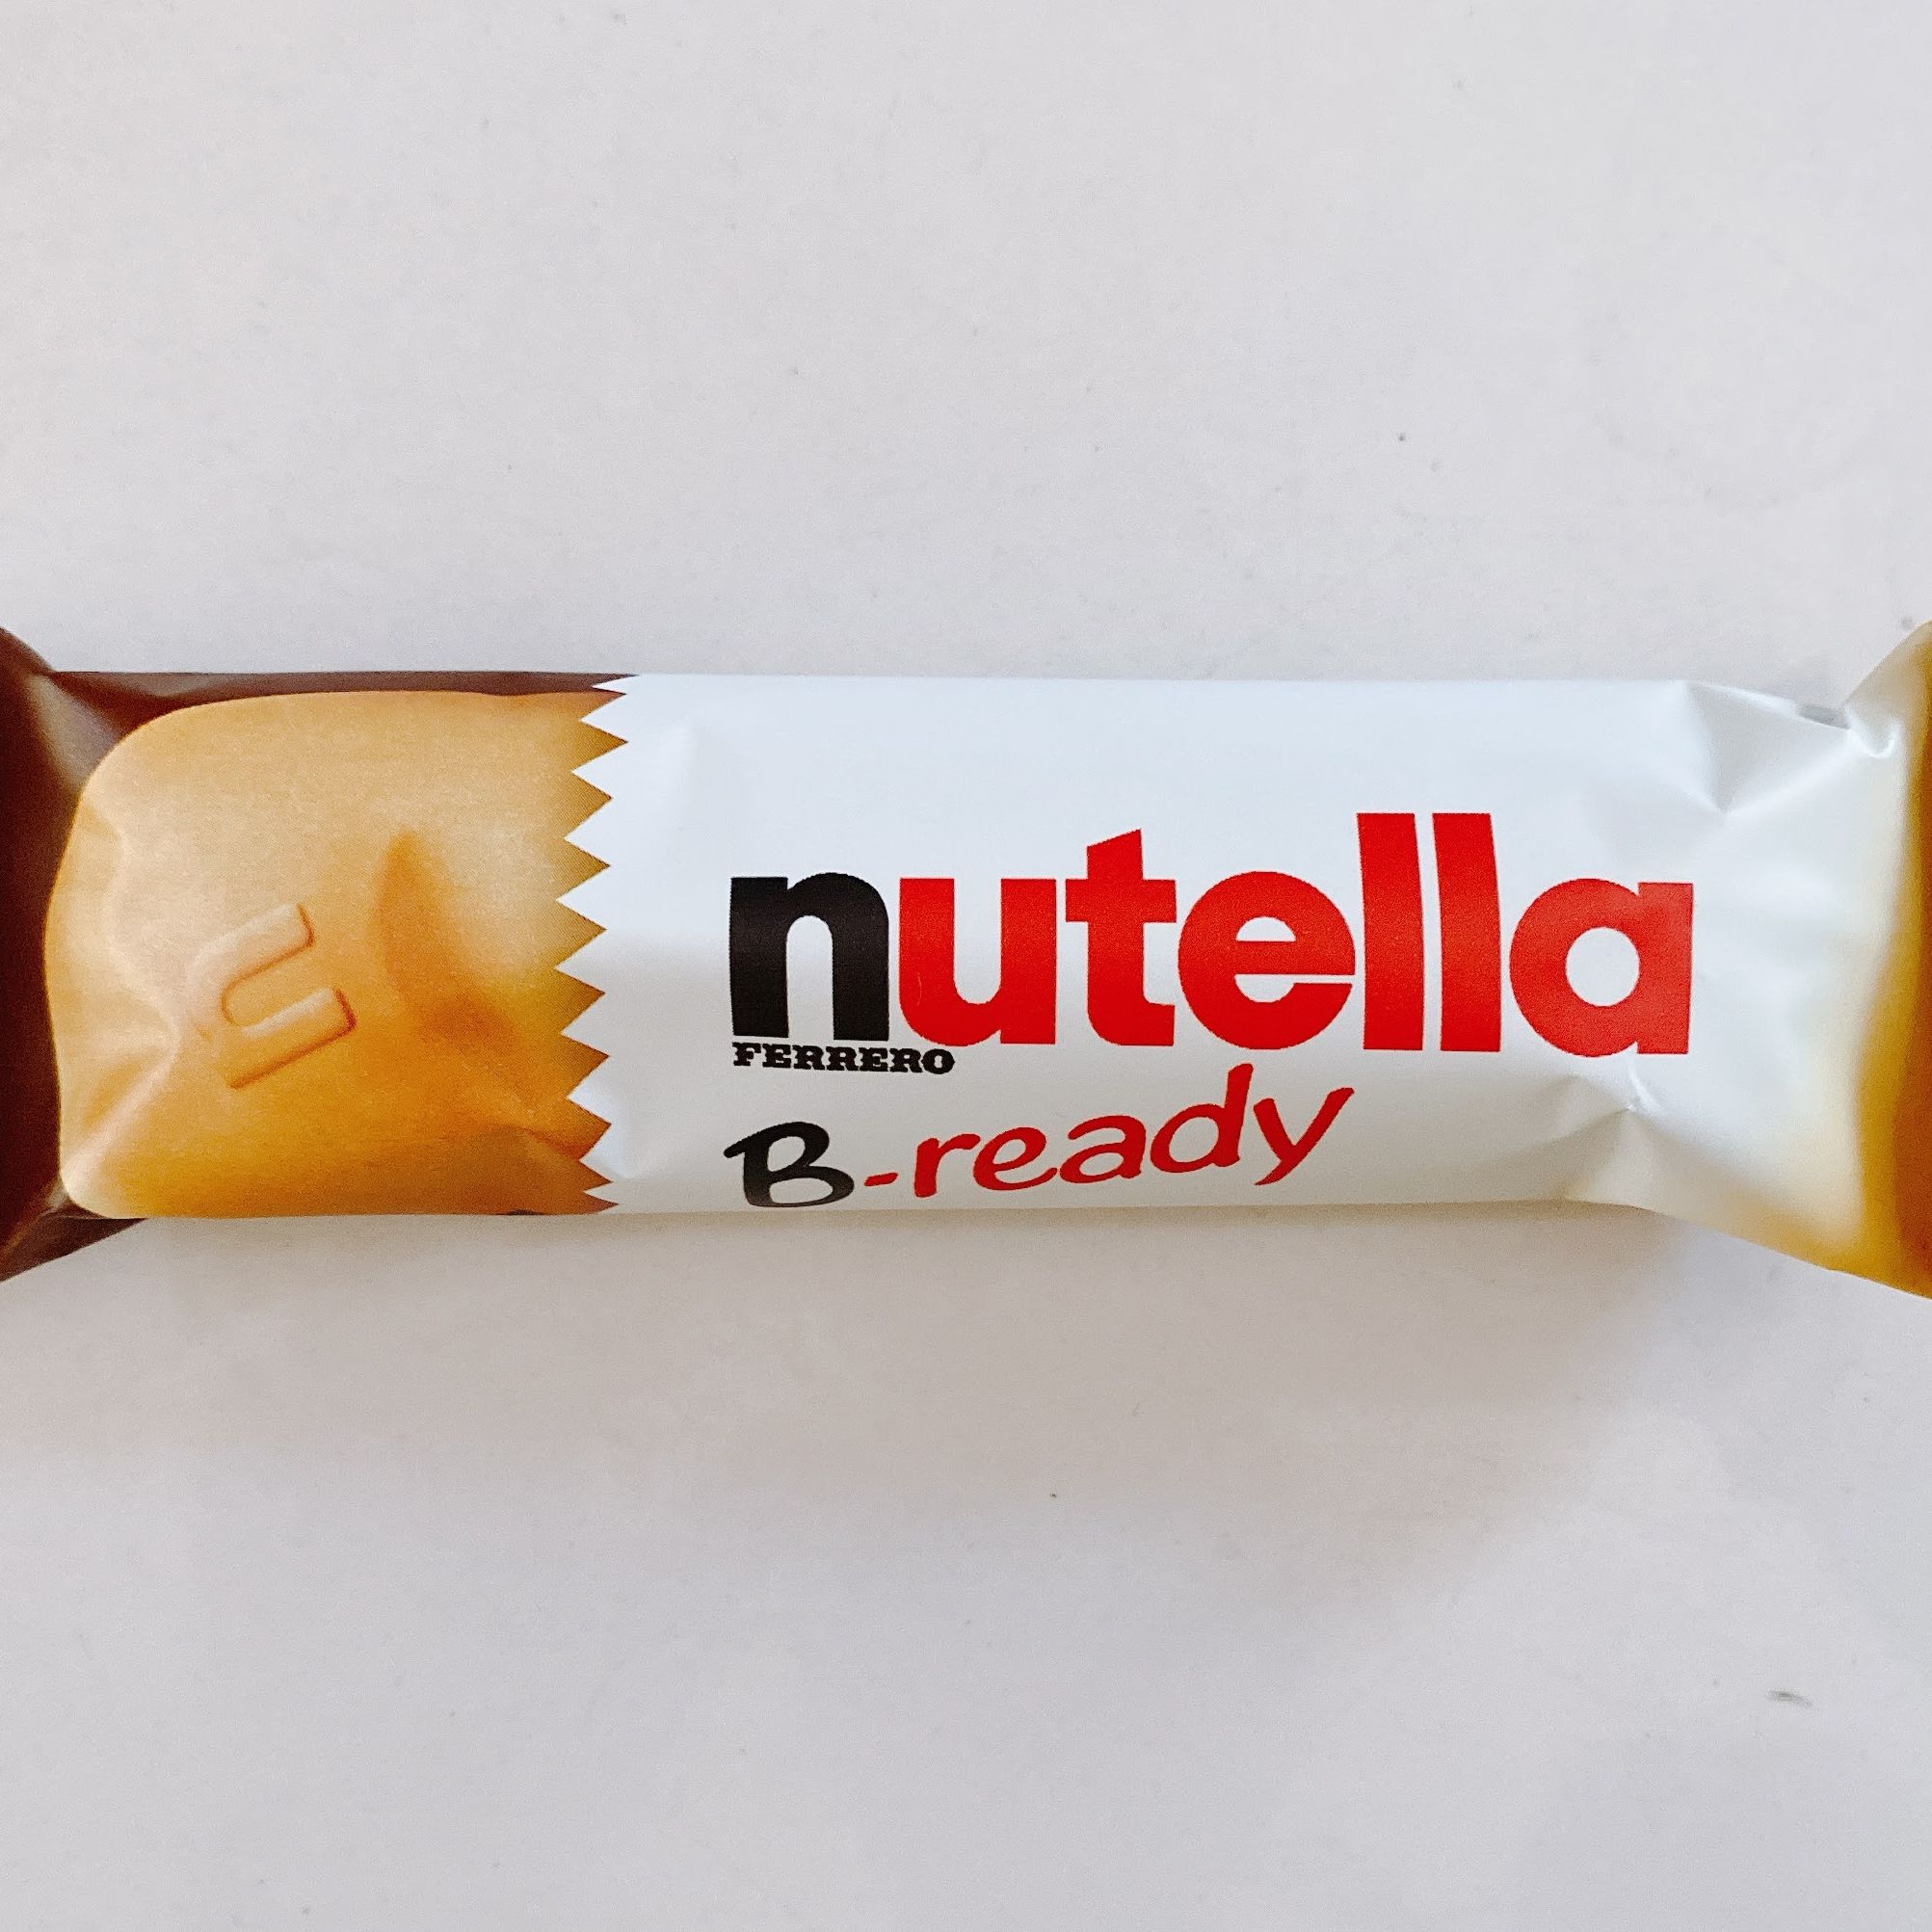 Nutella B-ready 1 ชิ้น